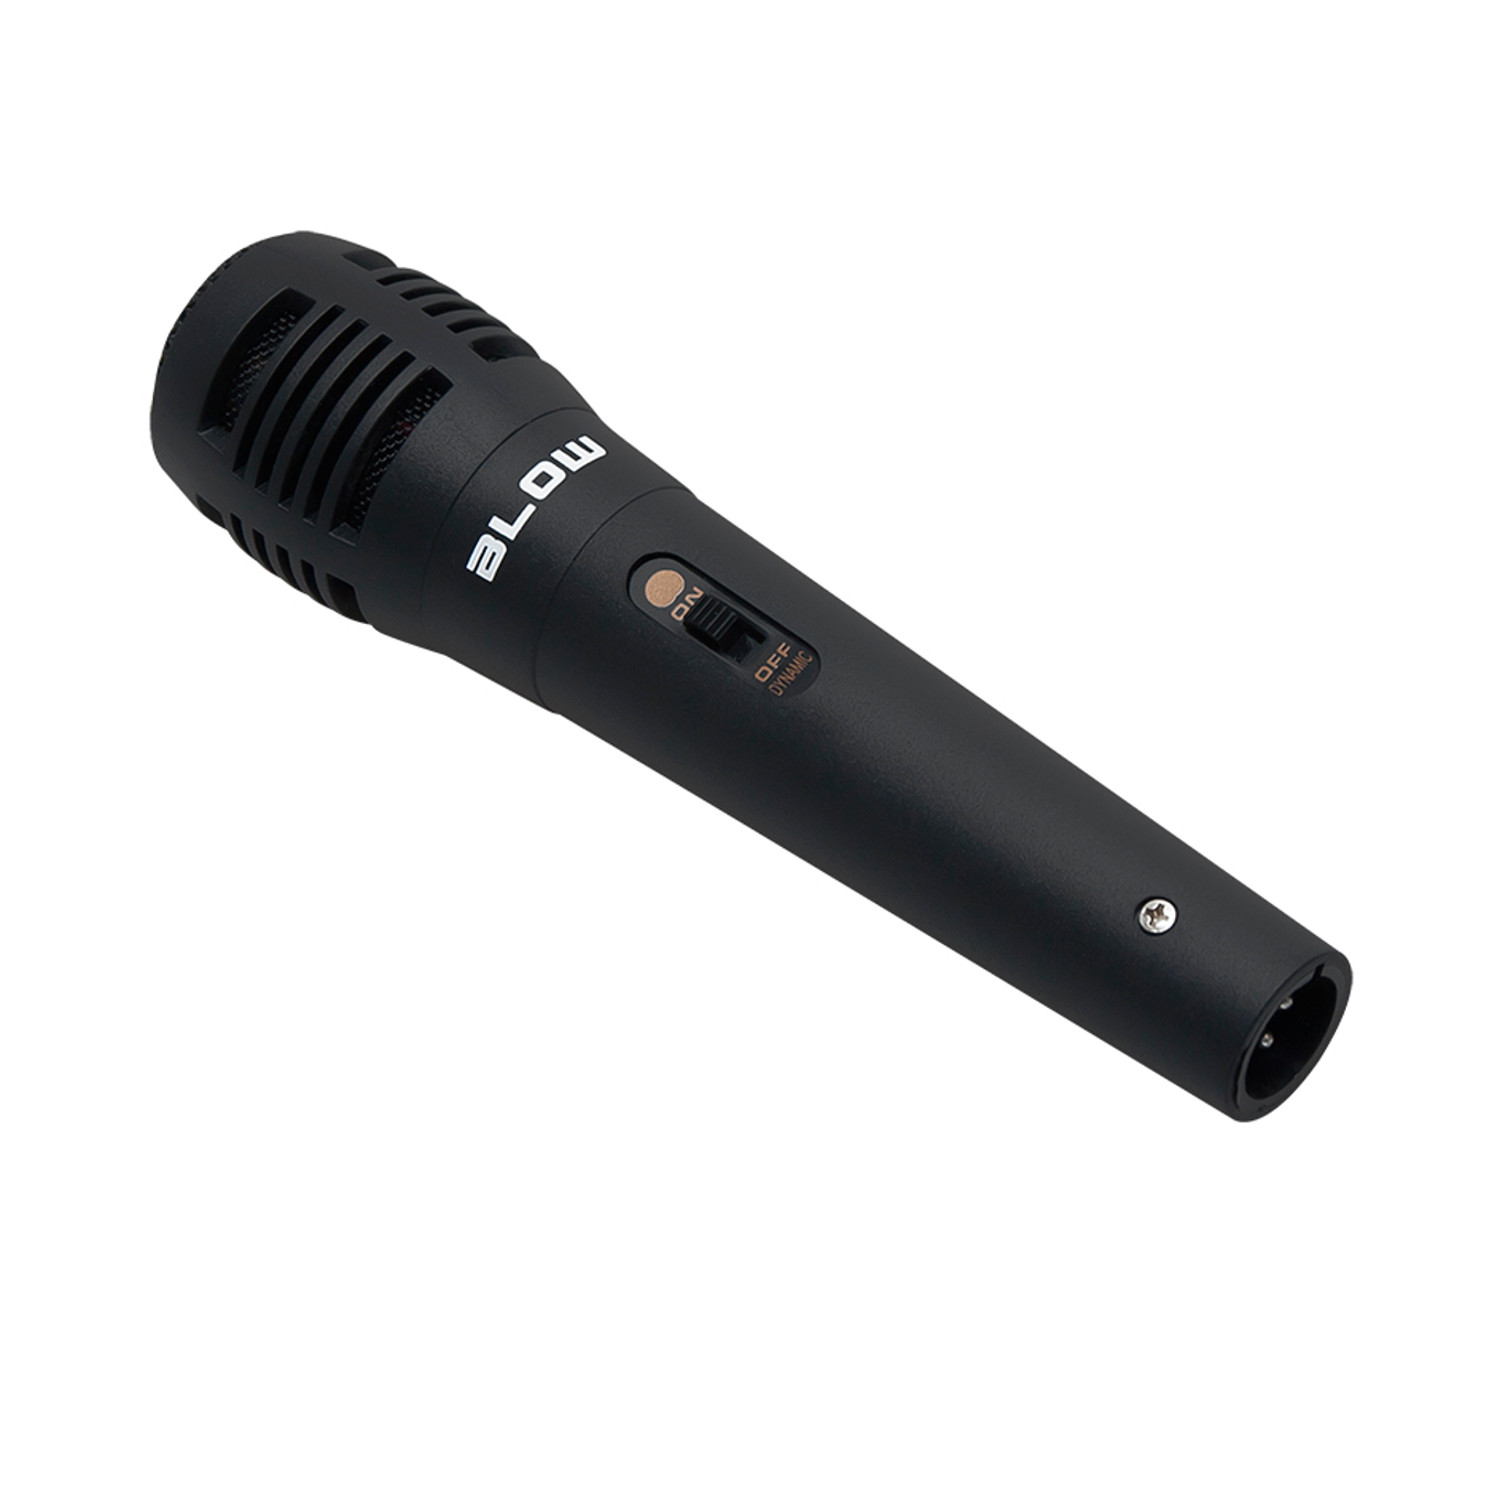 Profi Dynamisches Metall Mikrofon Handheld Microfon 5 Meter Kabel 6,35mm NEU DE 